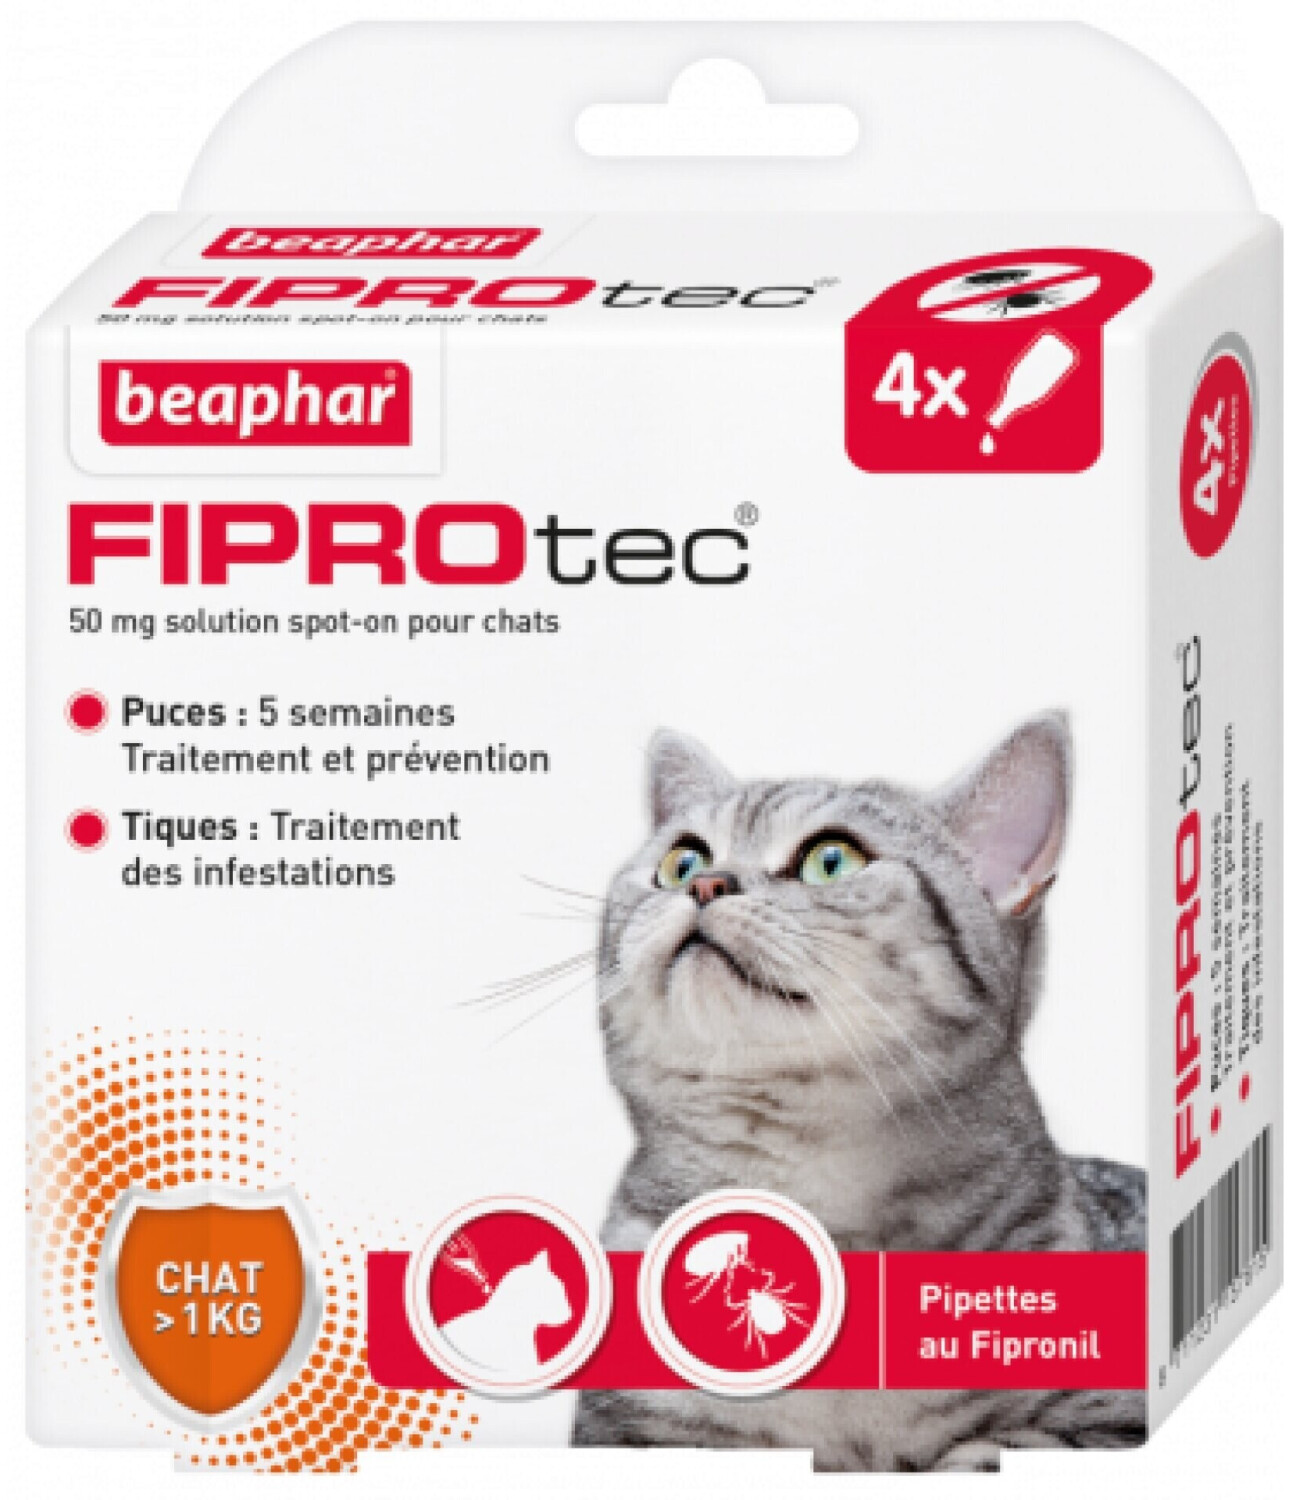 Beaphar Fiprotec cat ab 6,50 € Preisvergleich bei idealo.de